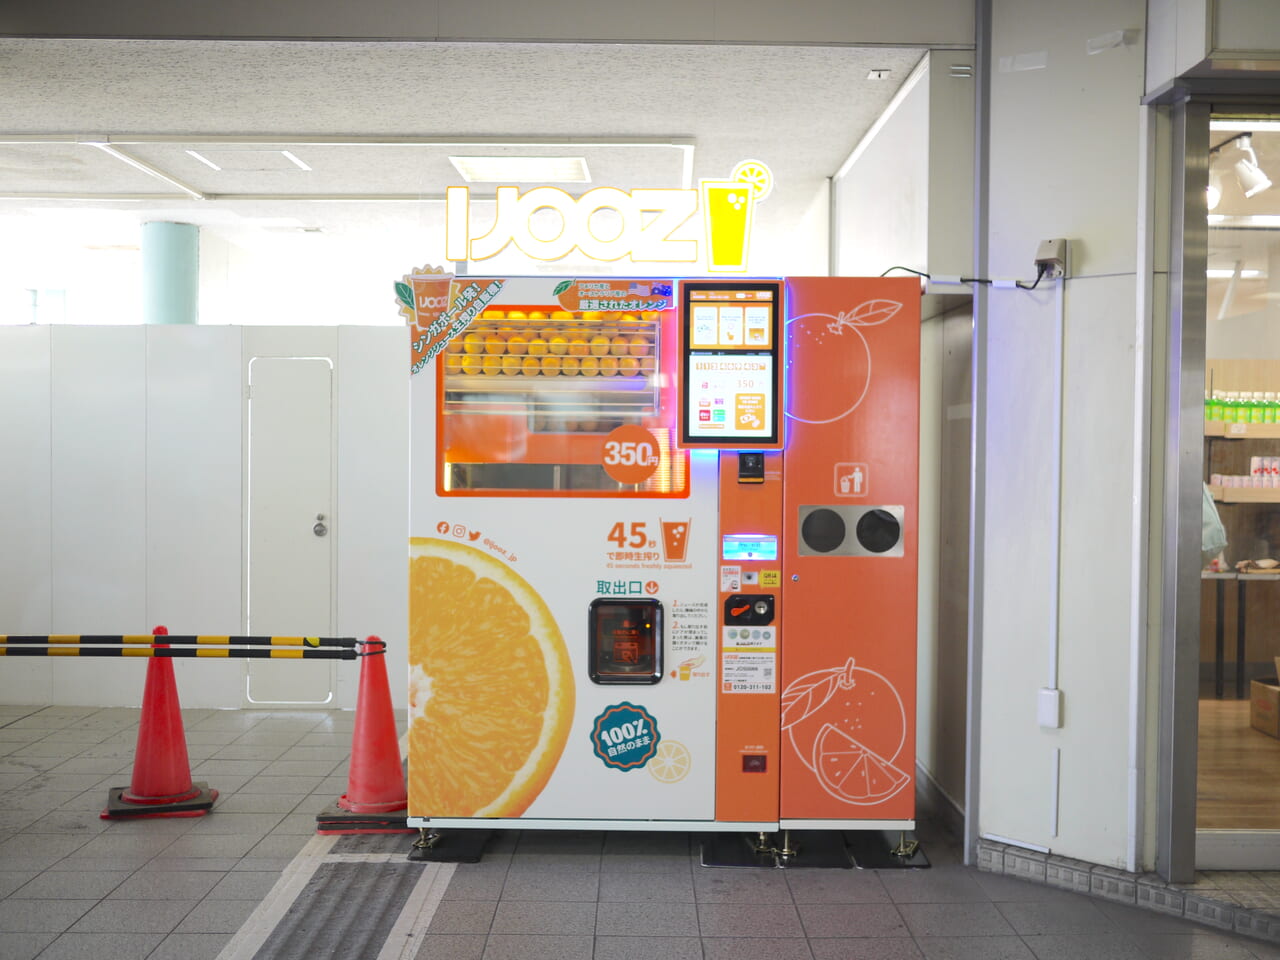 IJOOZの自動販売機